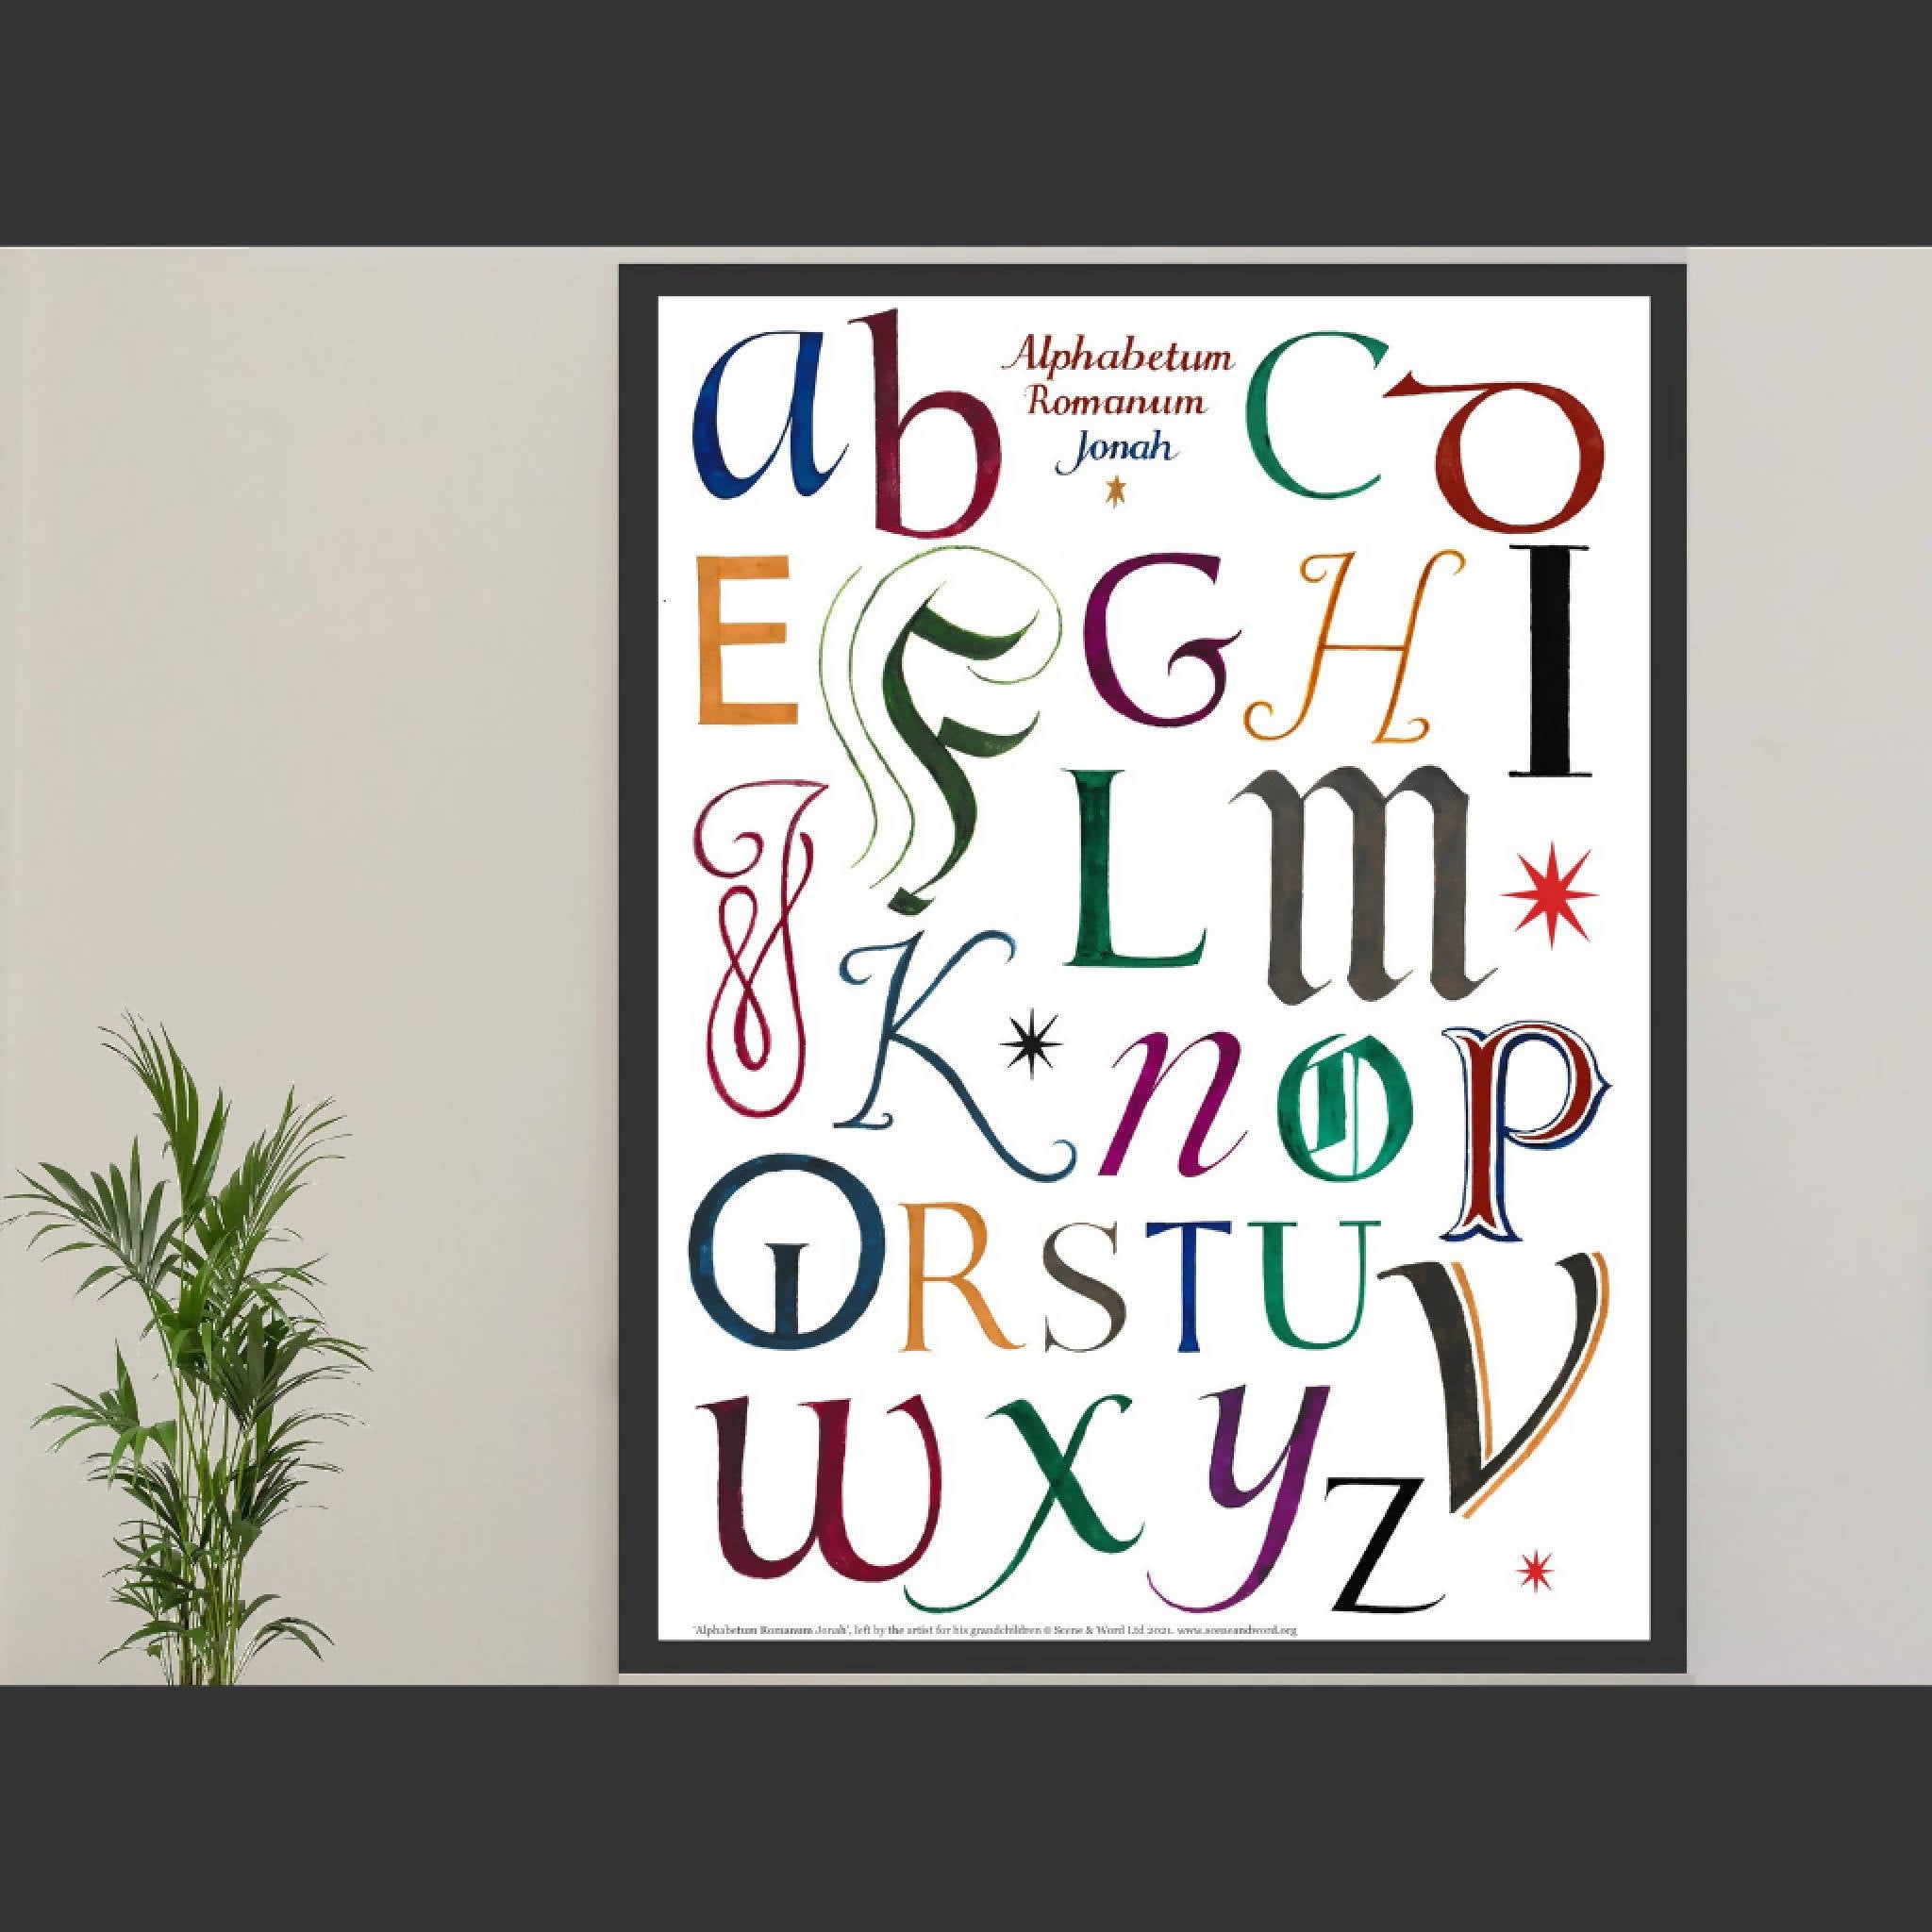 English alphabet poster: Alphabetum Romanum Jonah